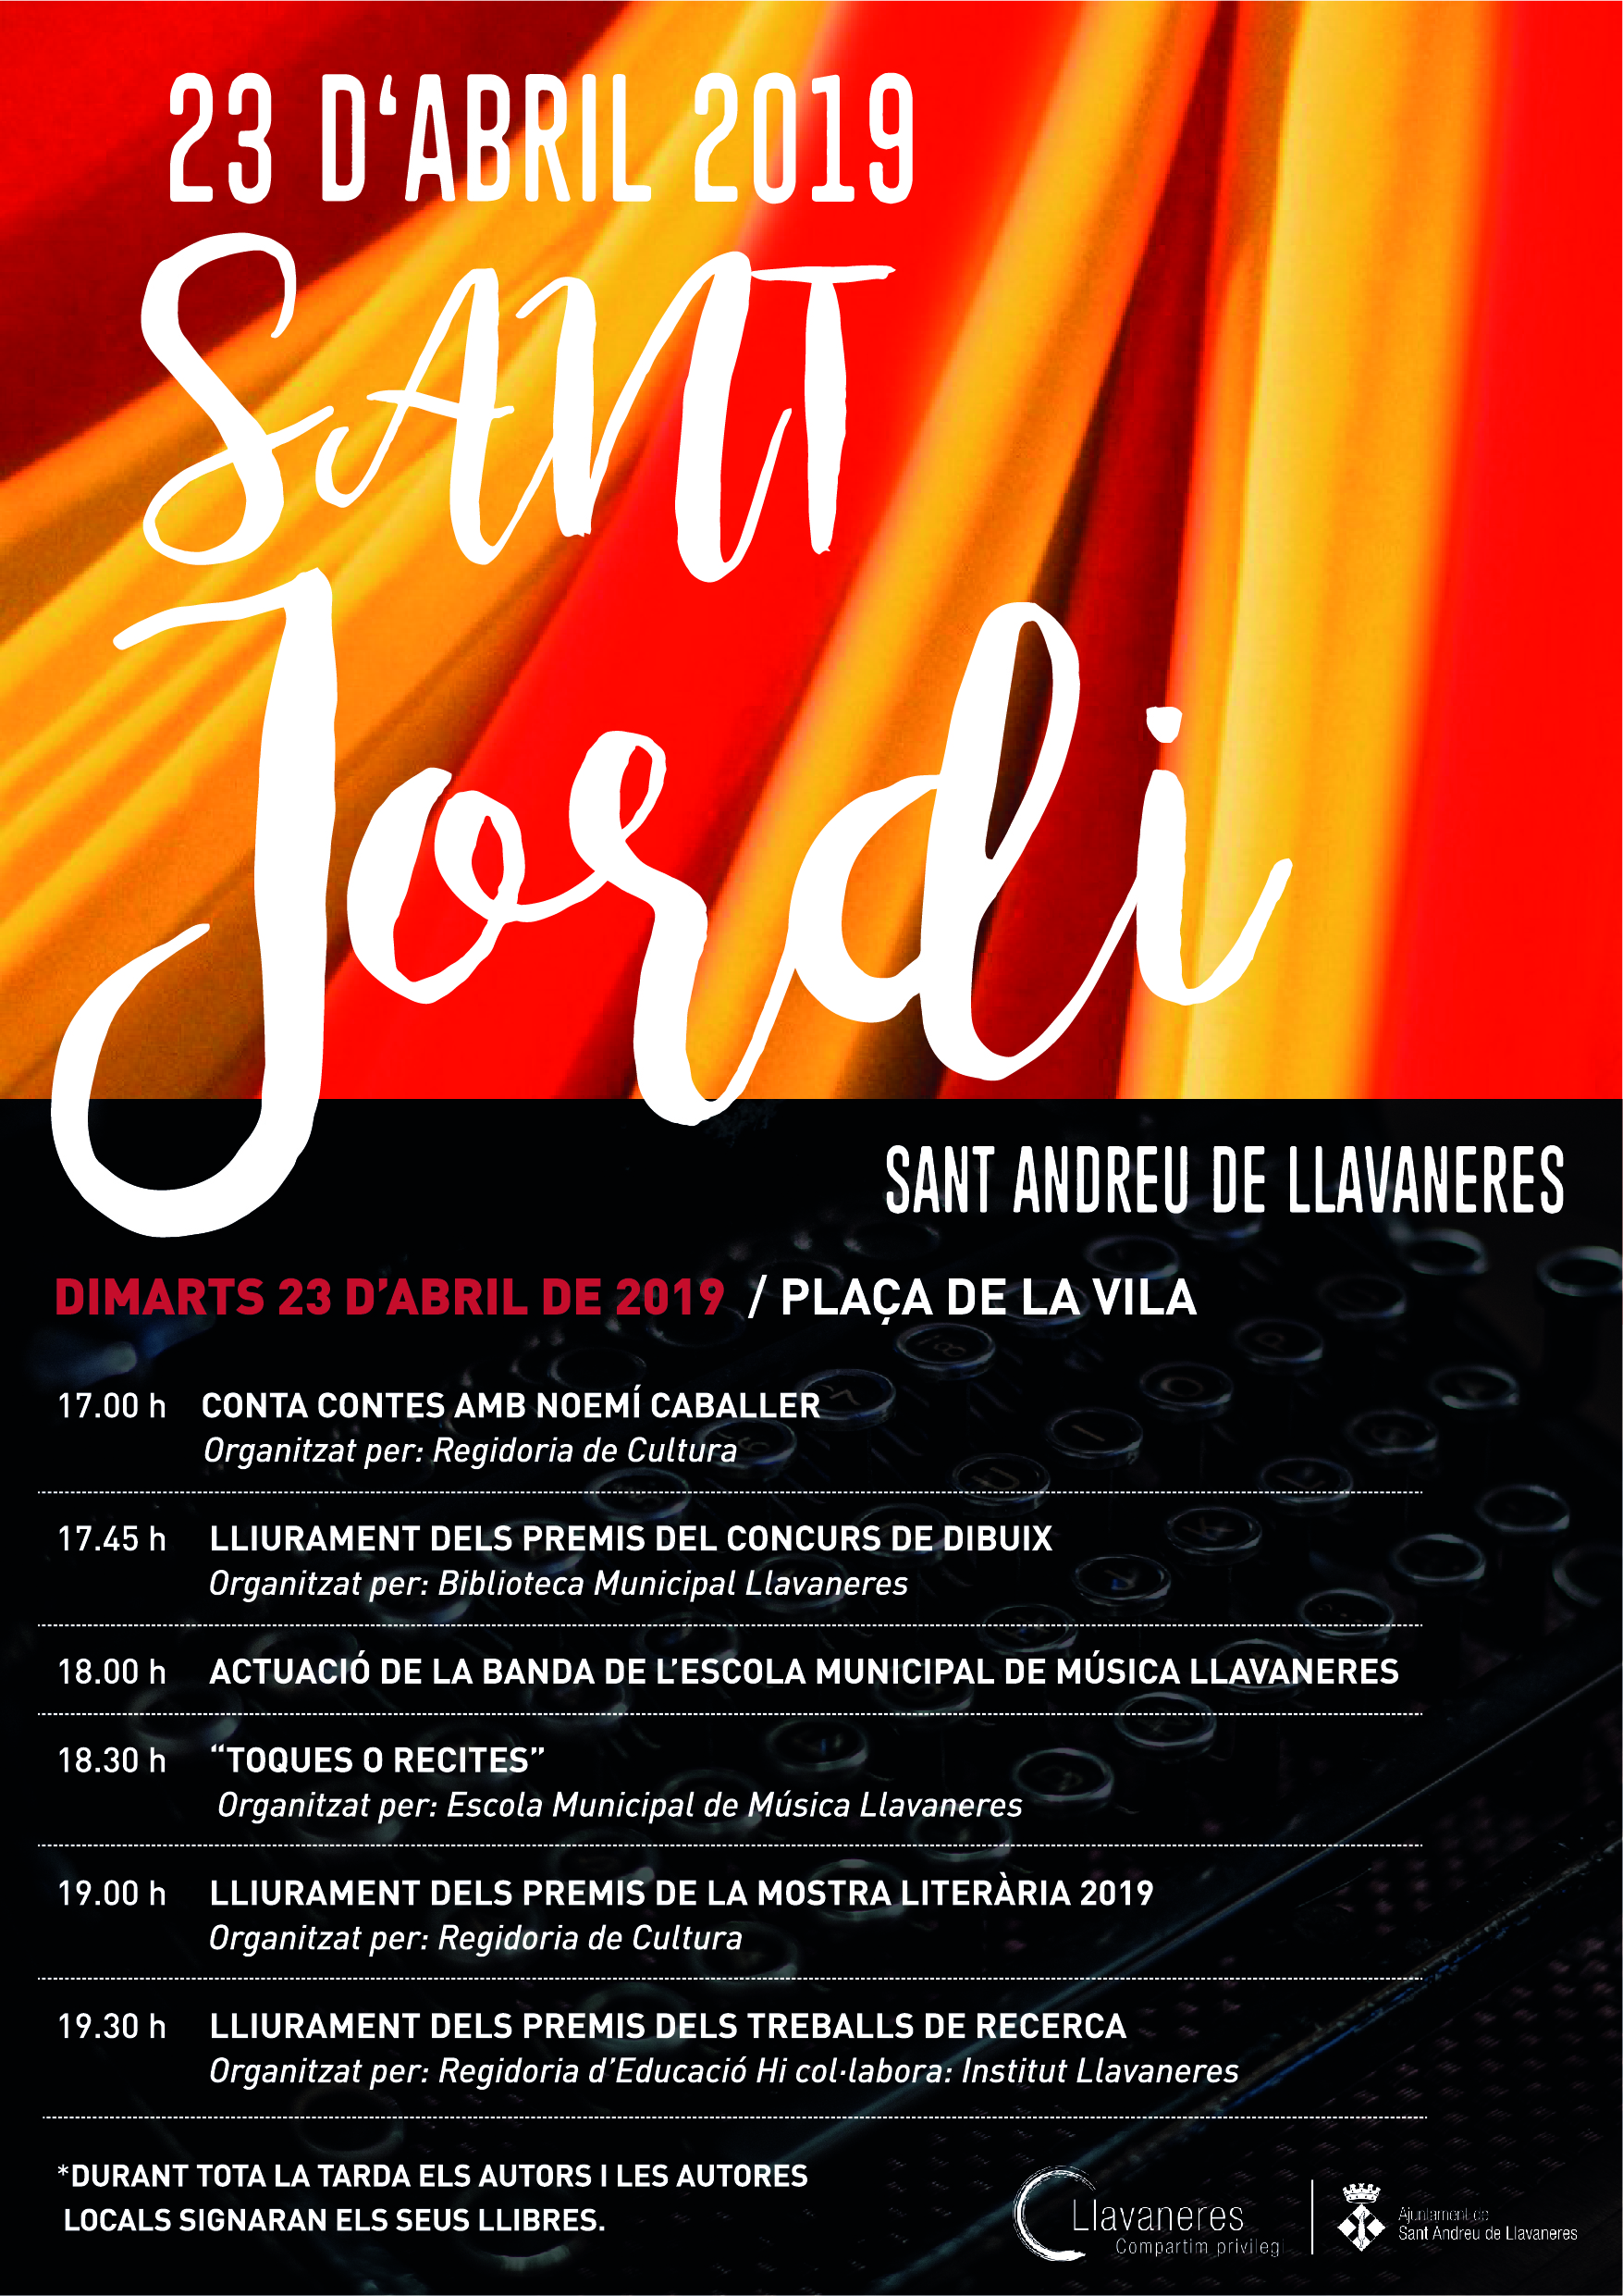 Sant Jordi 2019